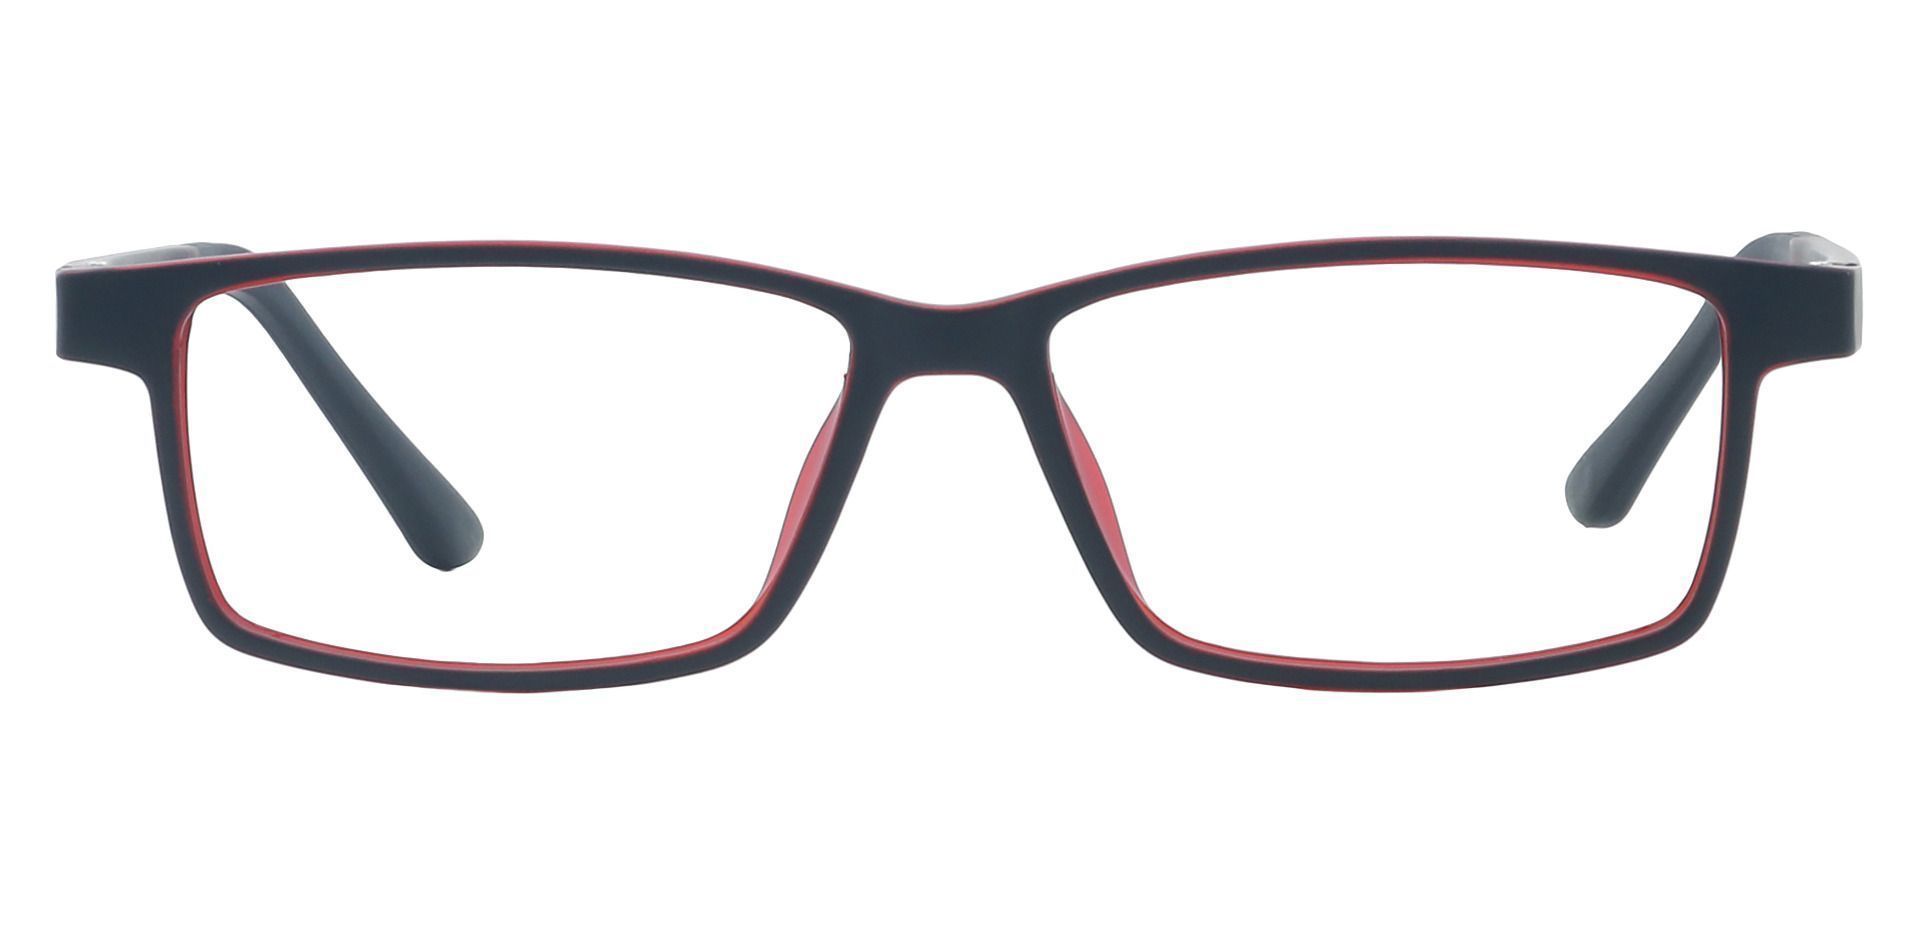 Hanson Rectangle Reading Glasses - Red